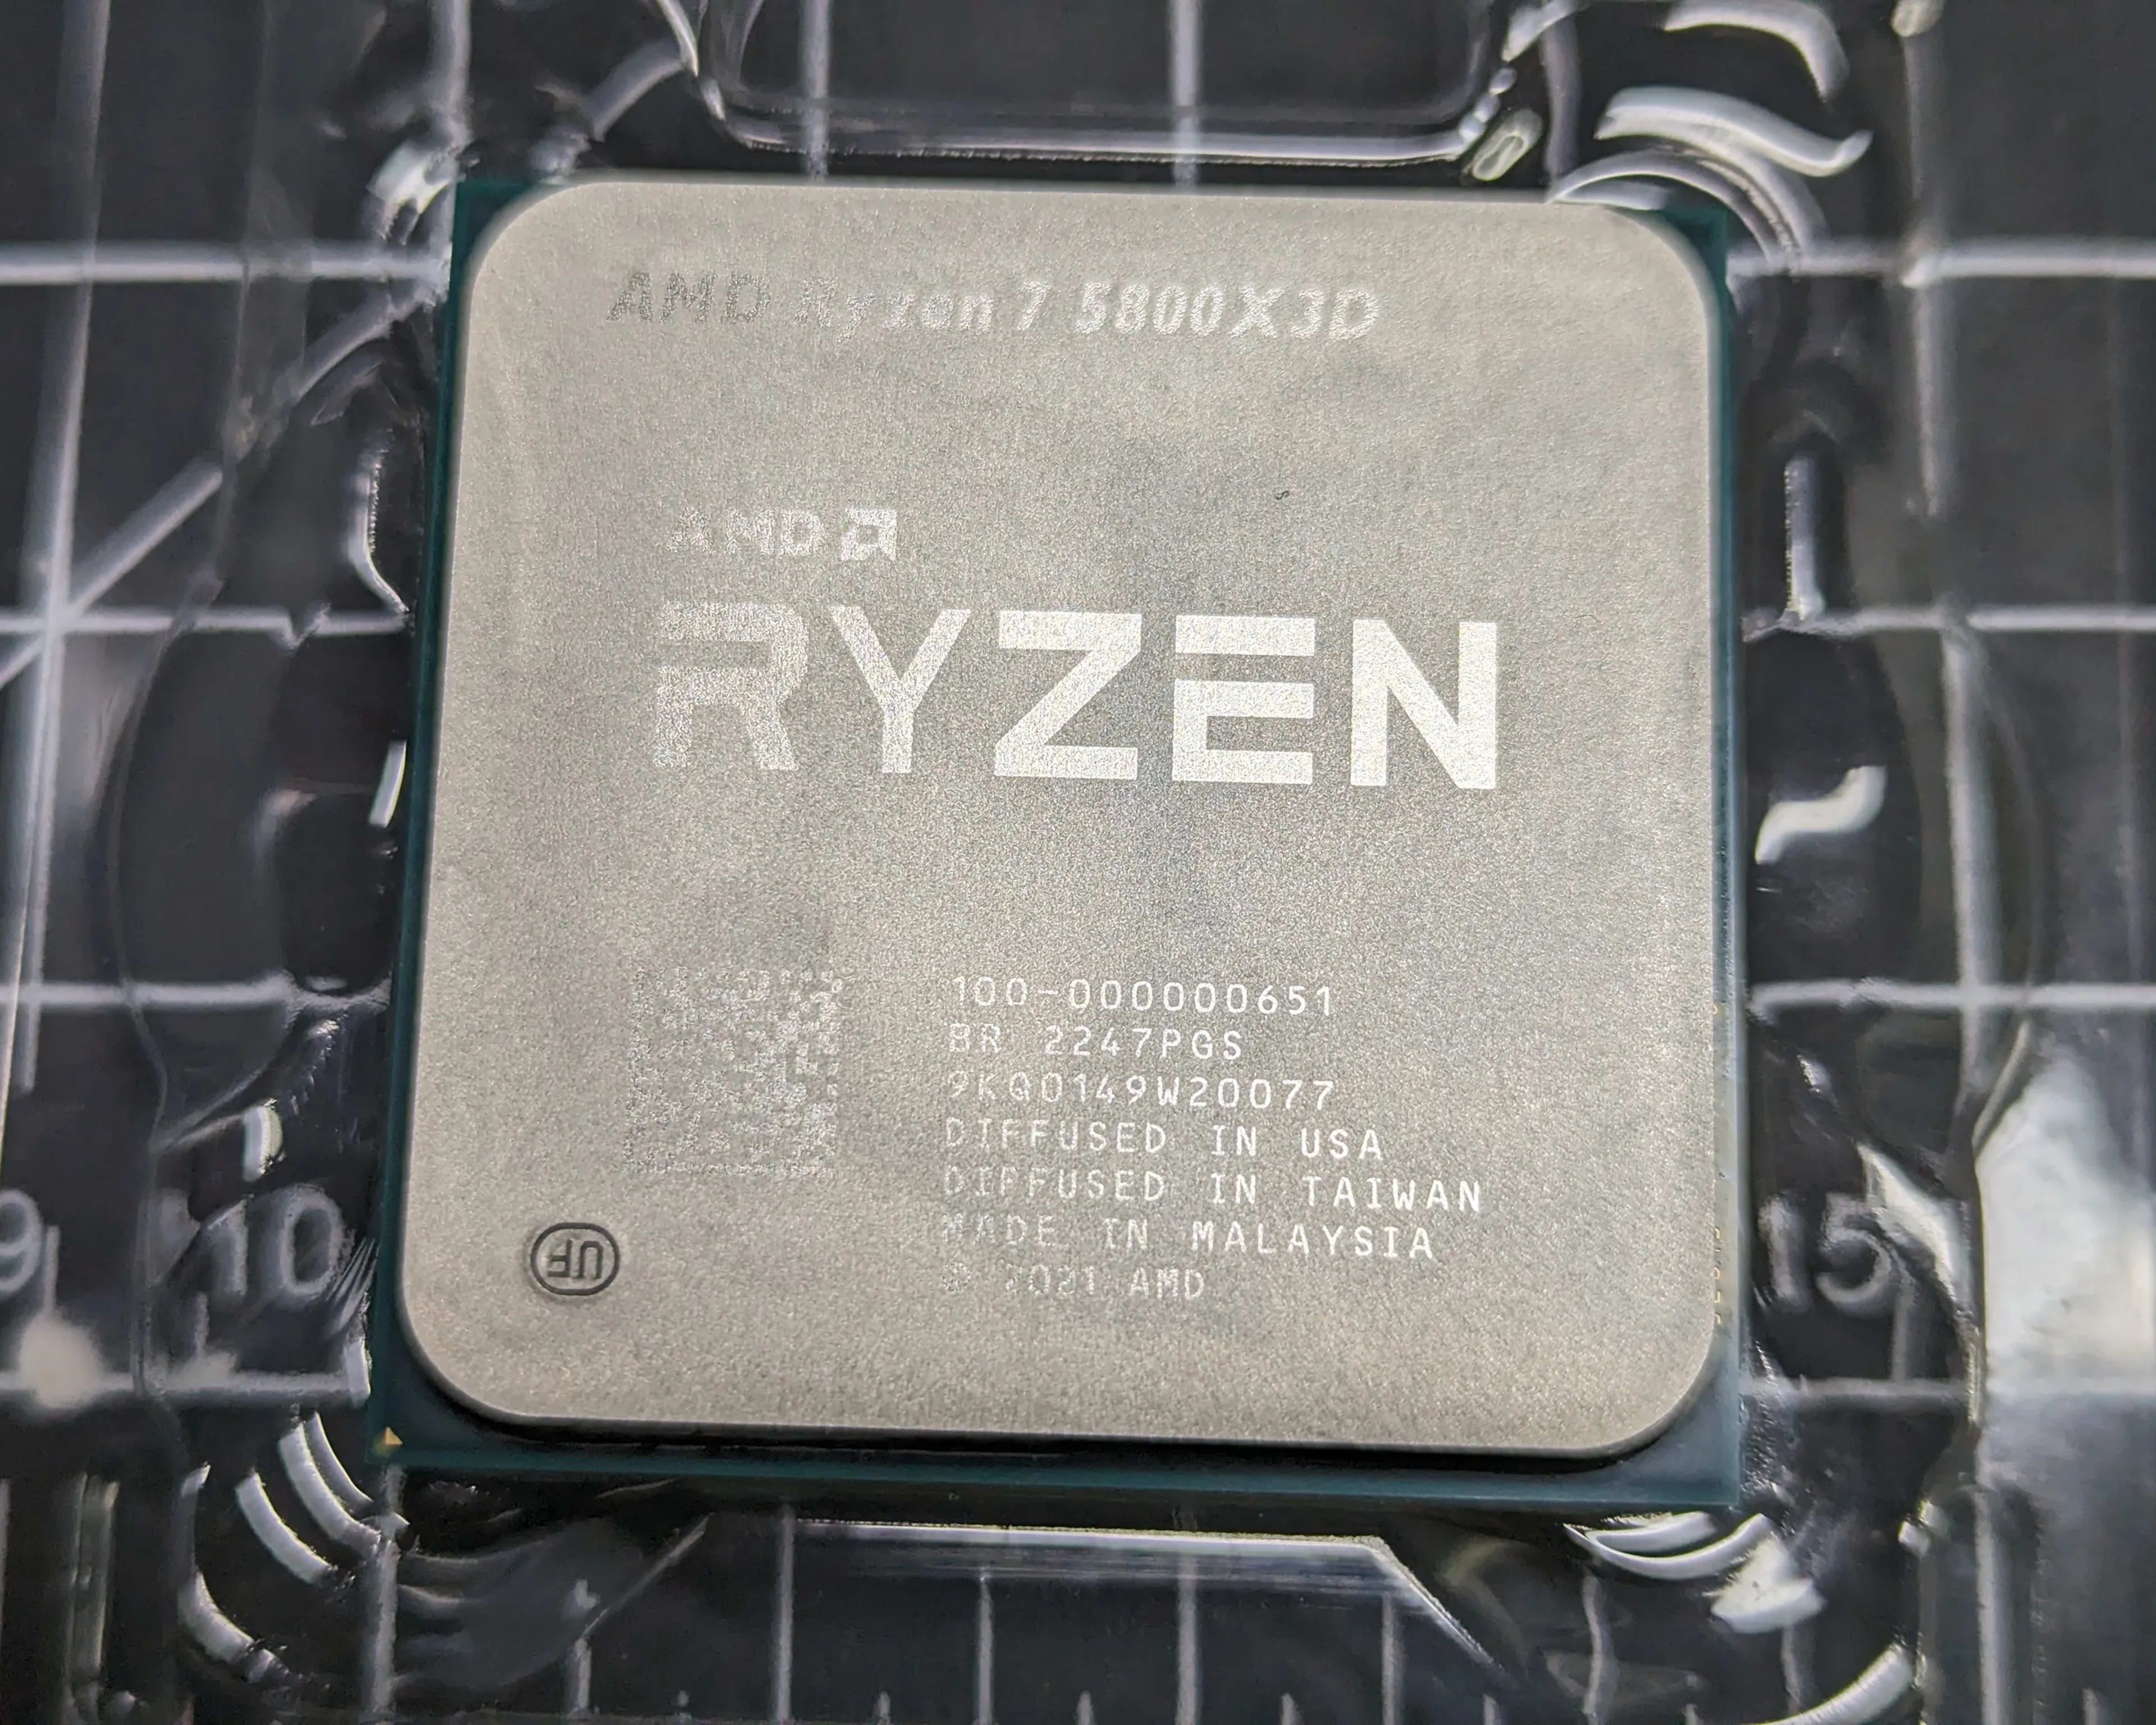 Gently Used AMD Ryzen 7 5800X3D 8-core, 16-Thread Desktop Processor with AMD 3D V-Cache Technology